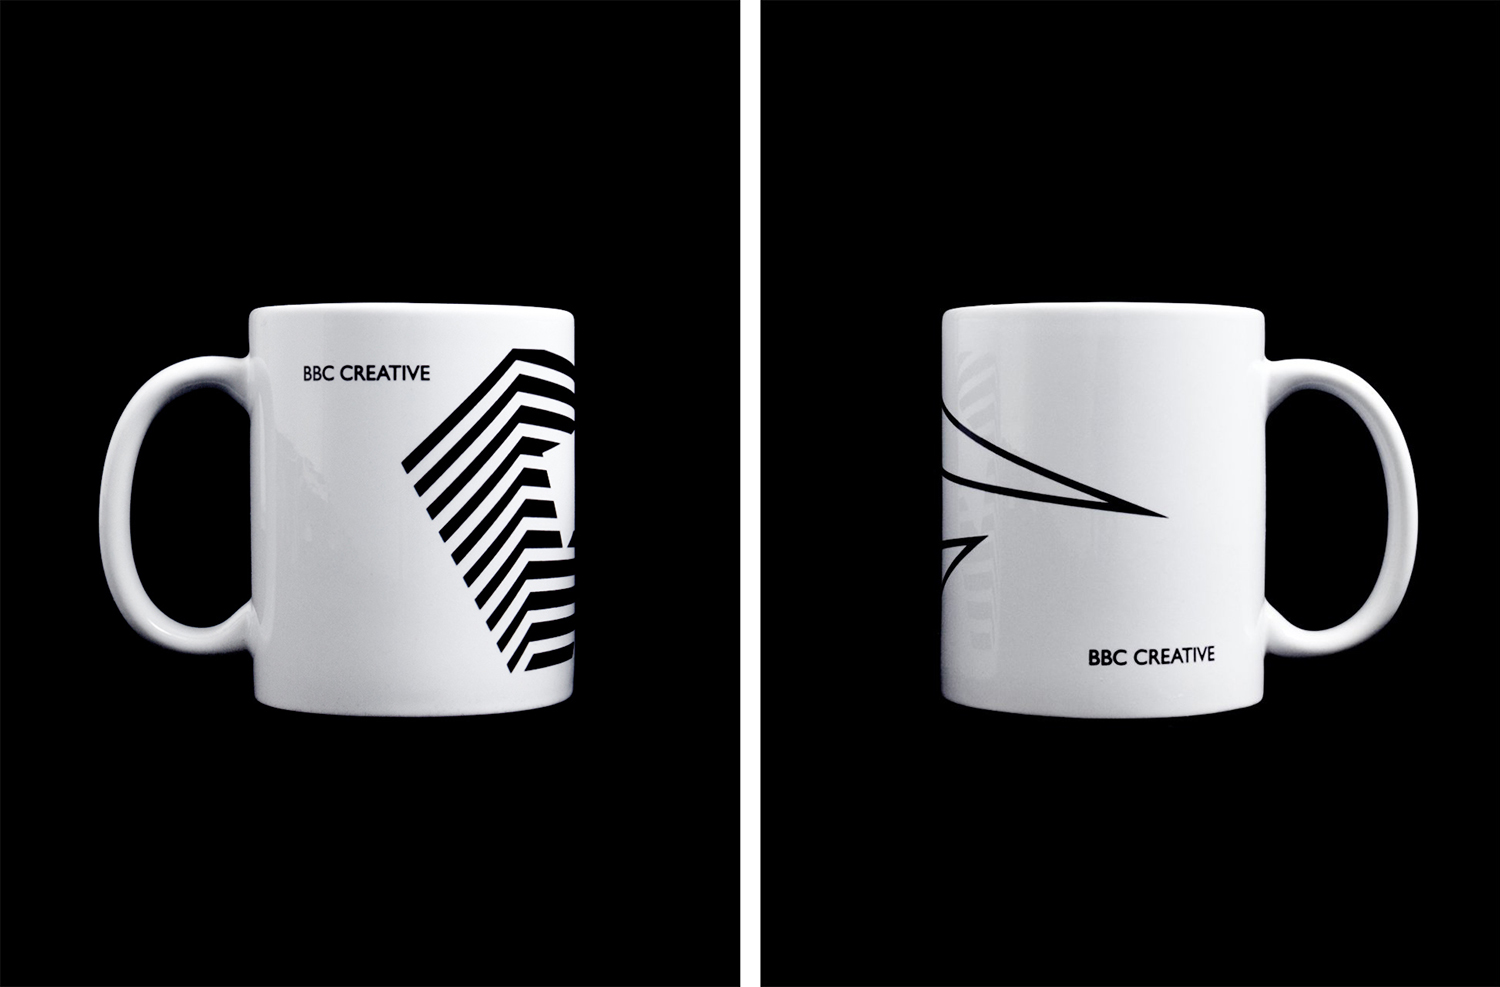 Black & White Branding – BBC Creative by Spin, United Kingdom